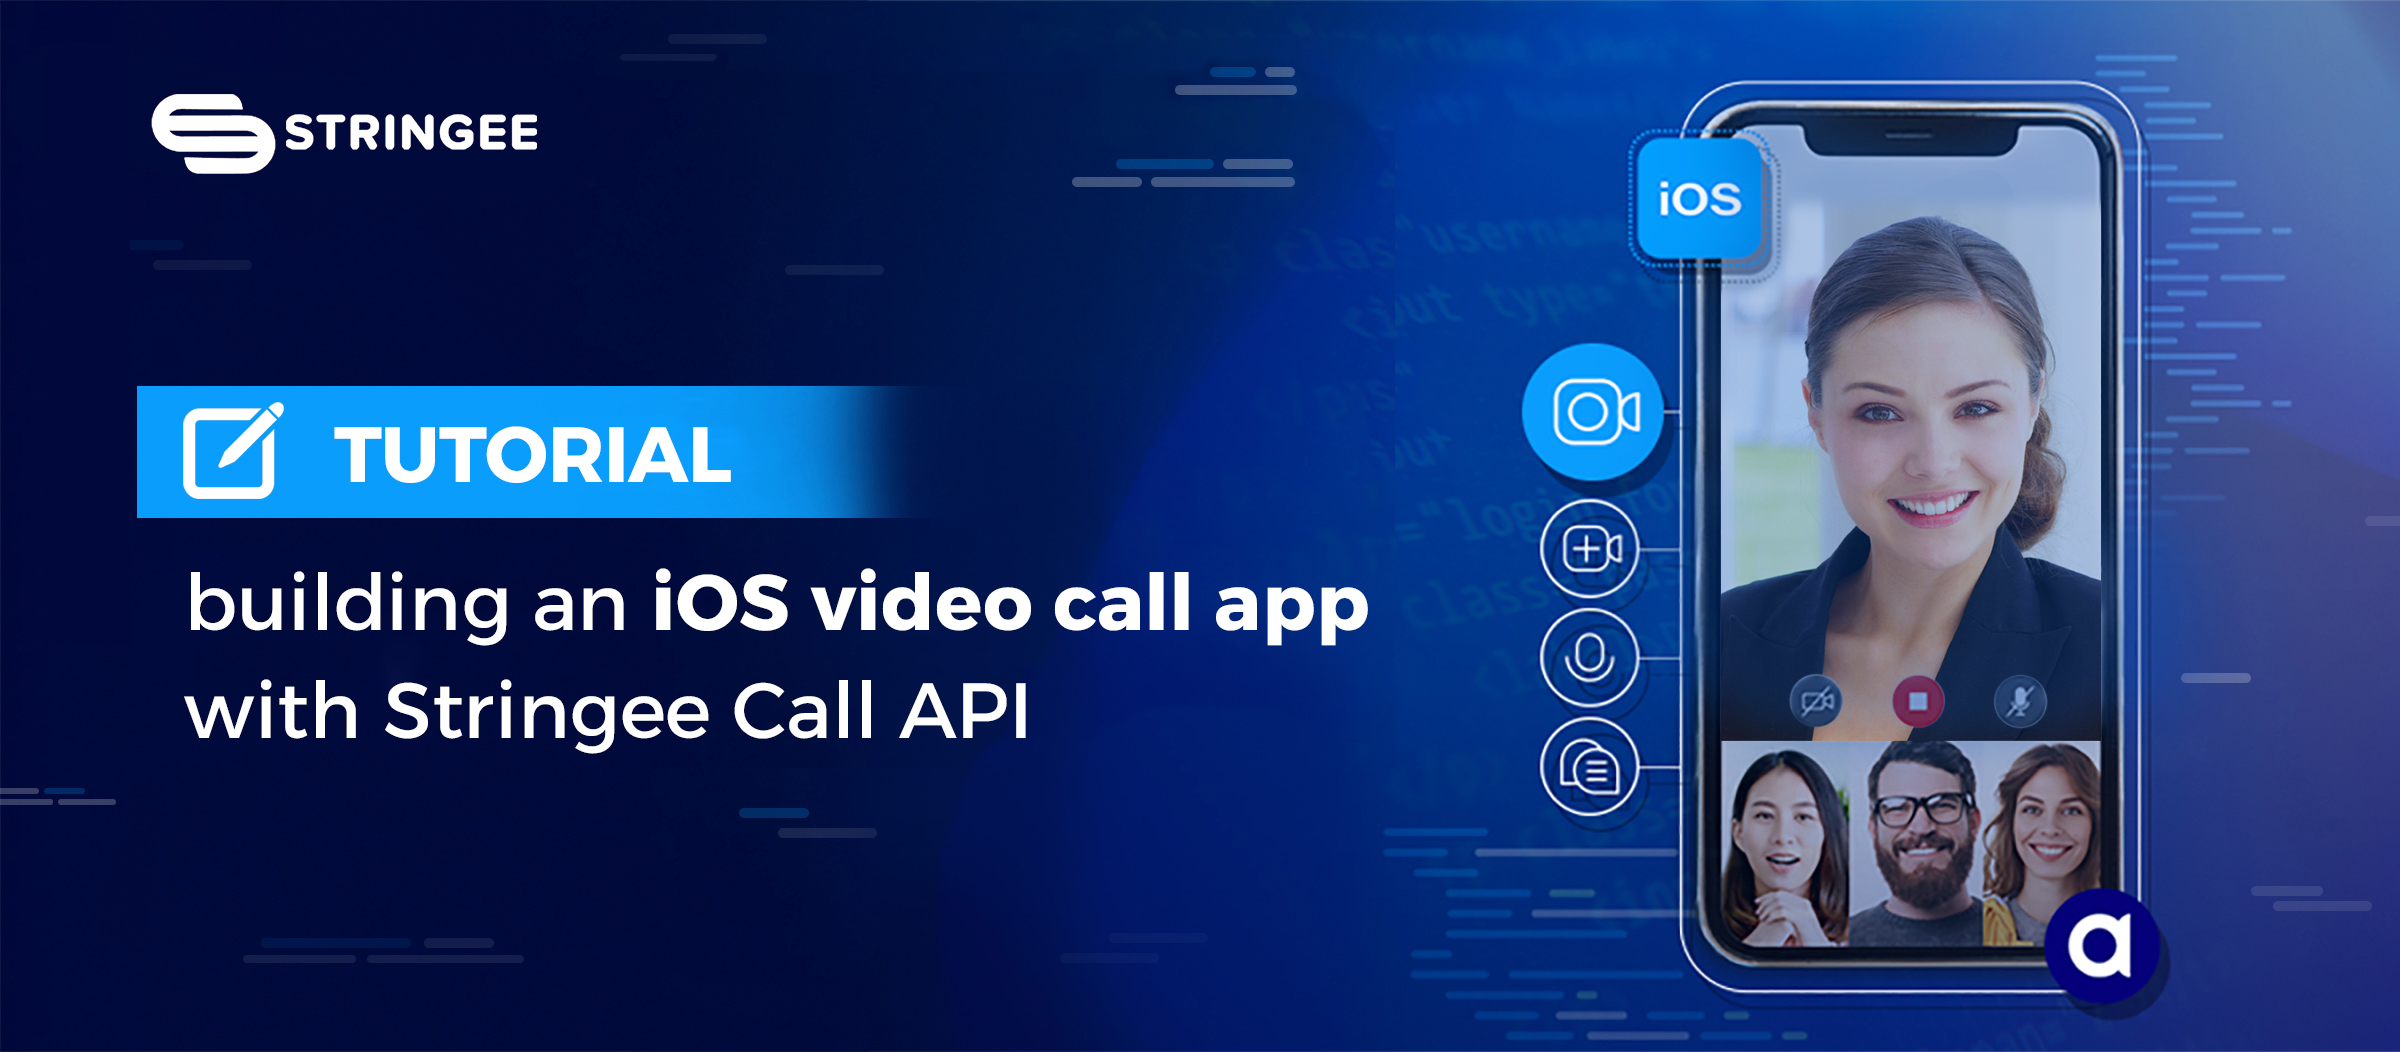 Tutorial: Building an iOS video call app with Stringee Call API